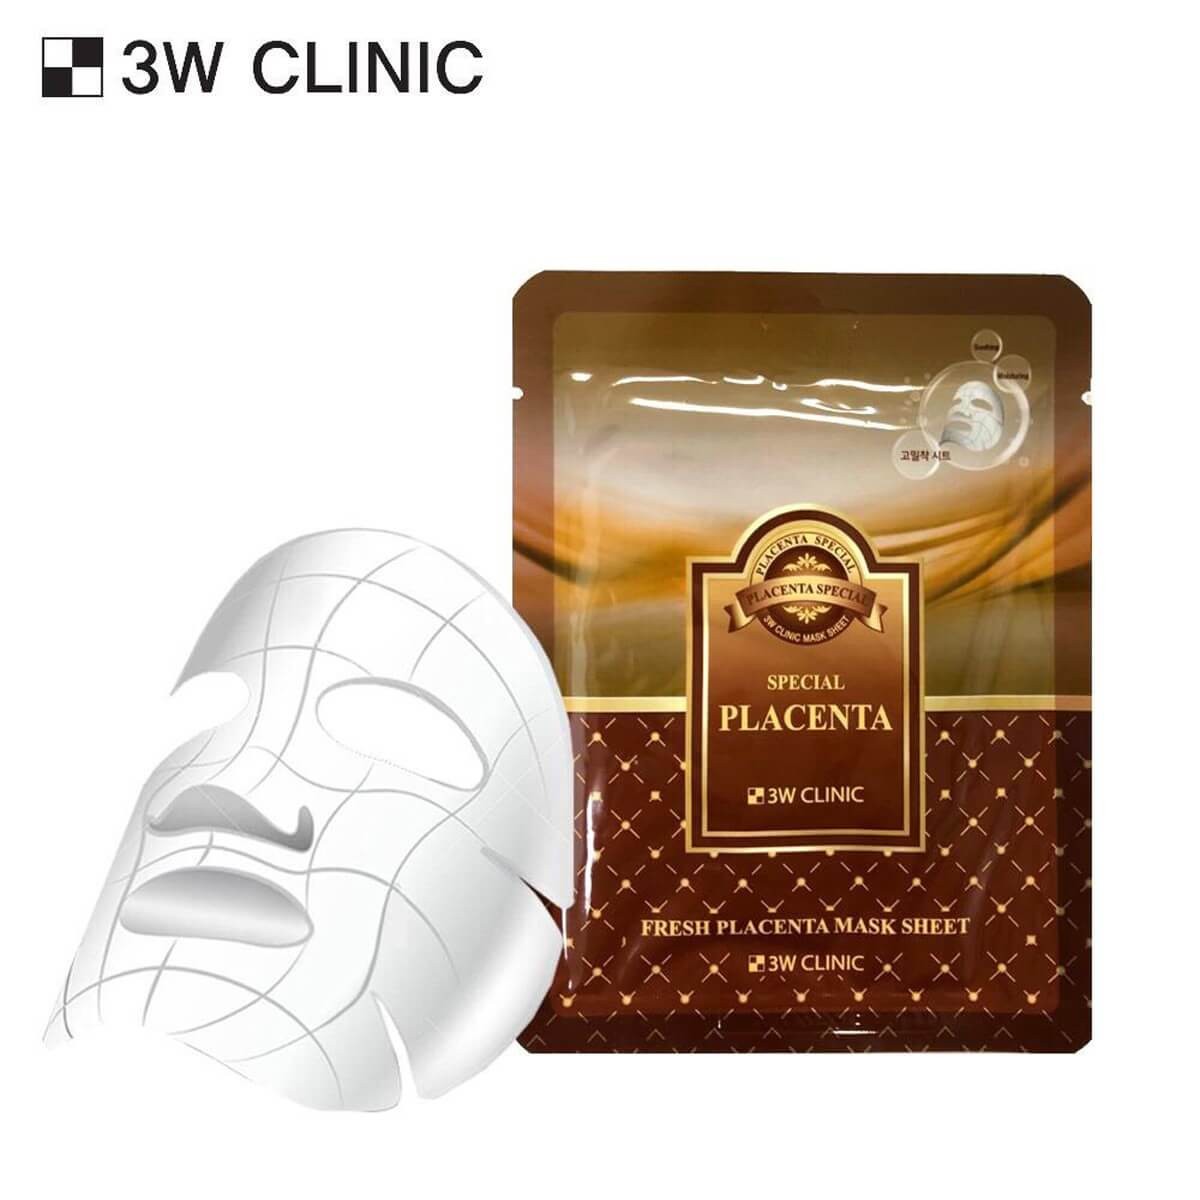 Fresh Placenta Mask Sheet [3W Cliniс]